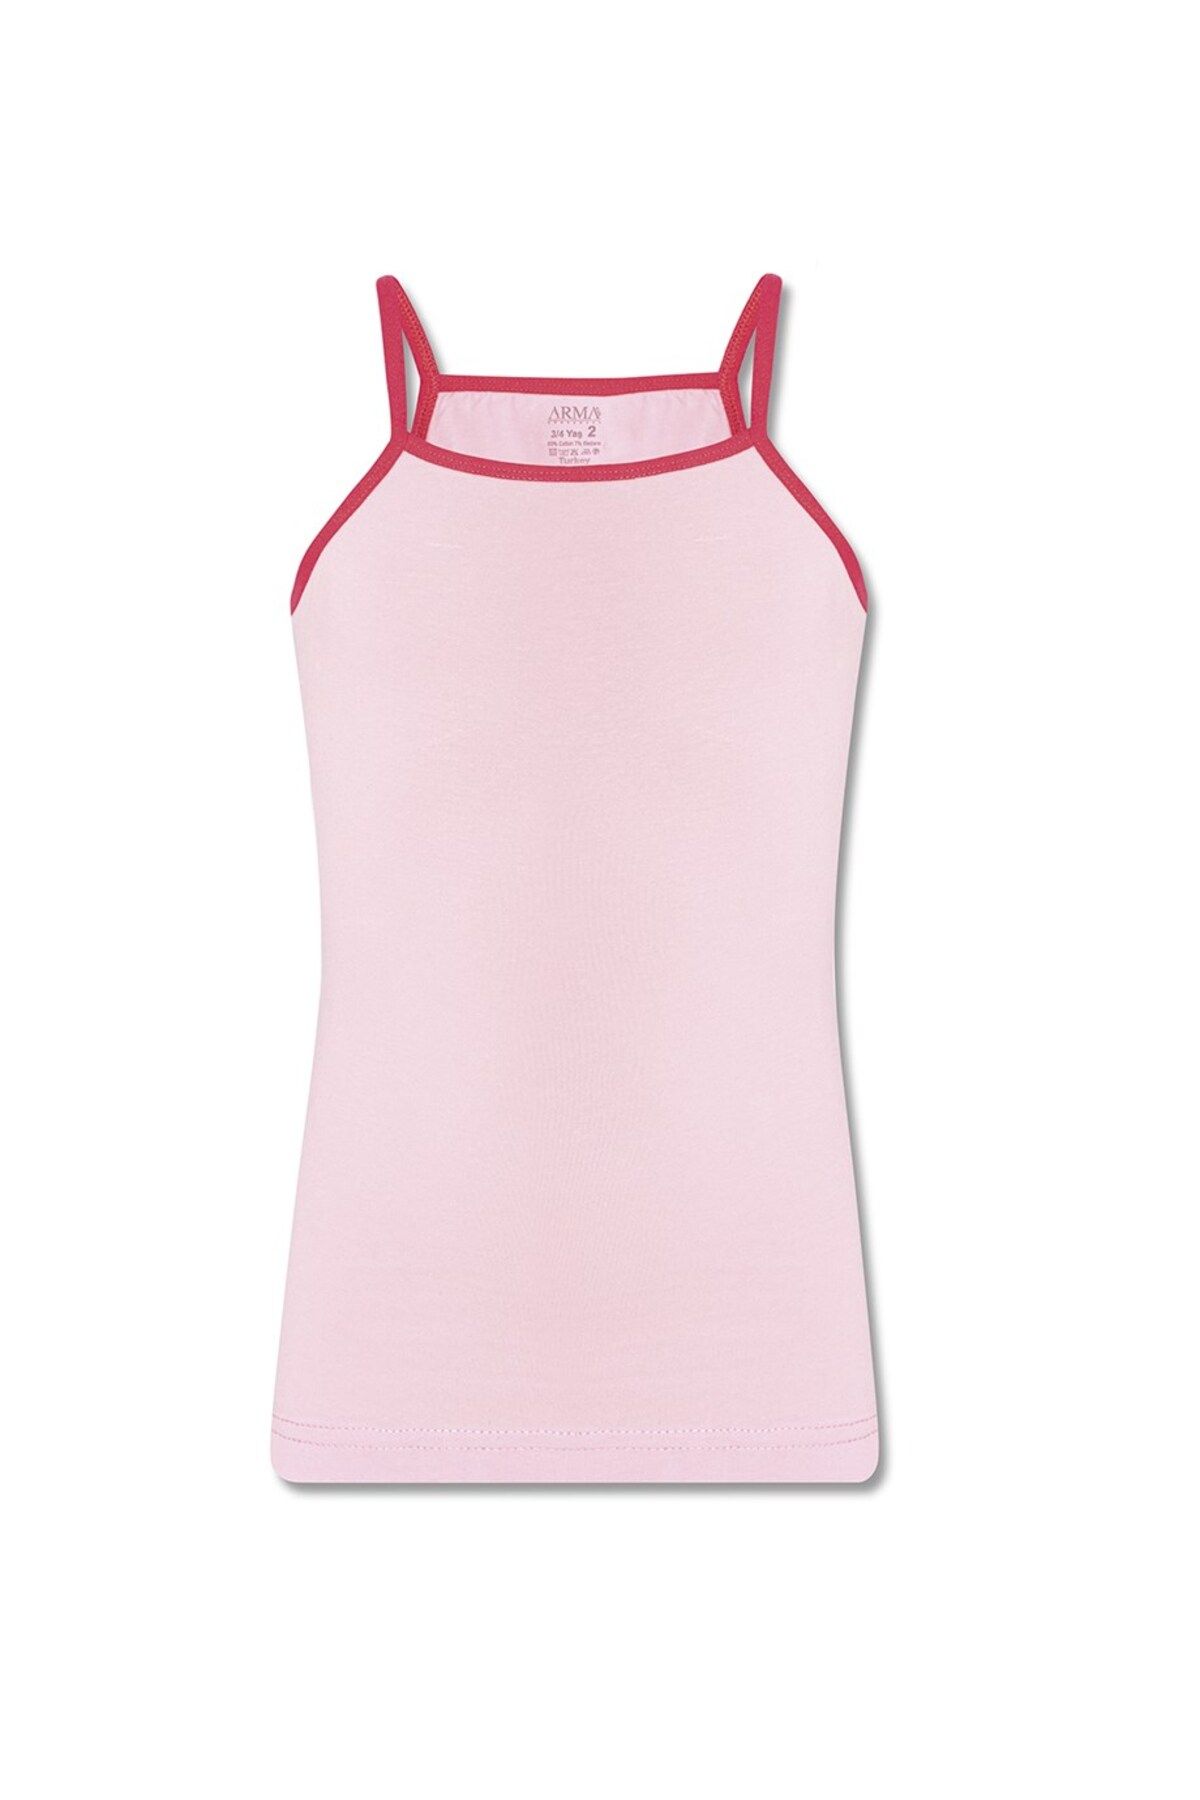 Arma Yıldız Girl's Pink Undershirt with Lycra Rope Strap 3 Pack - Trendyol